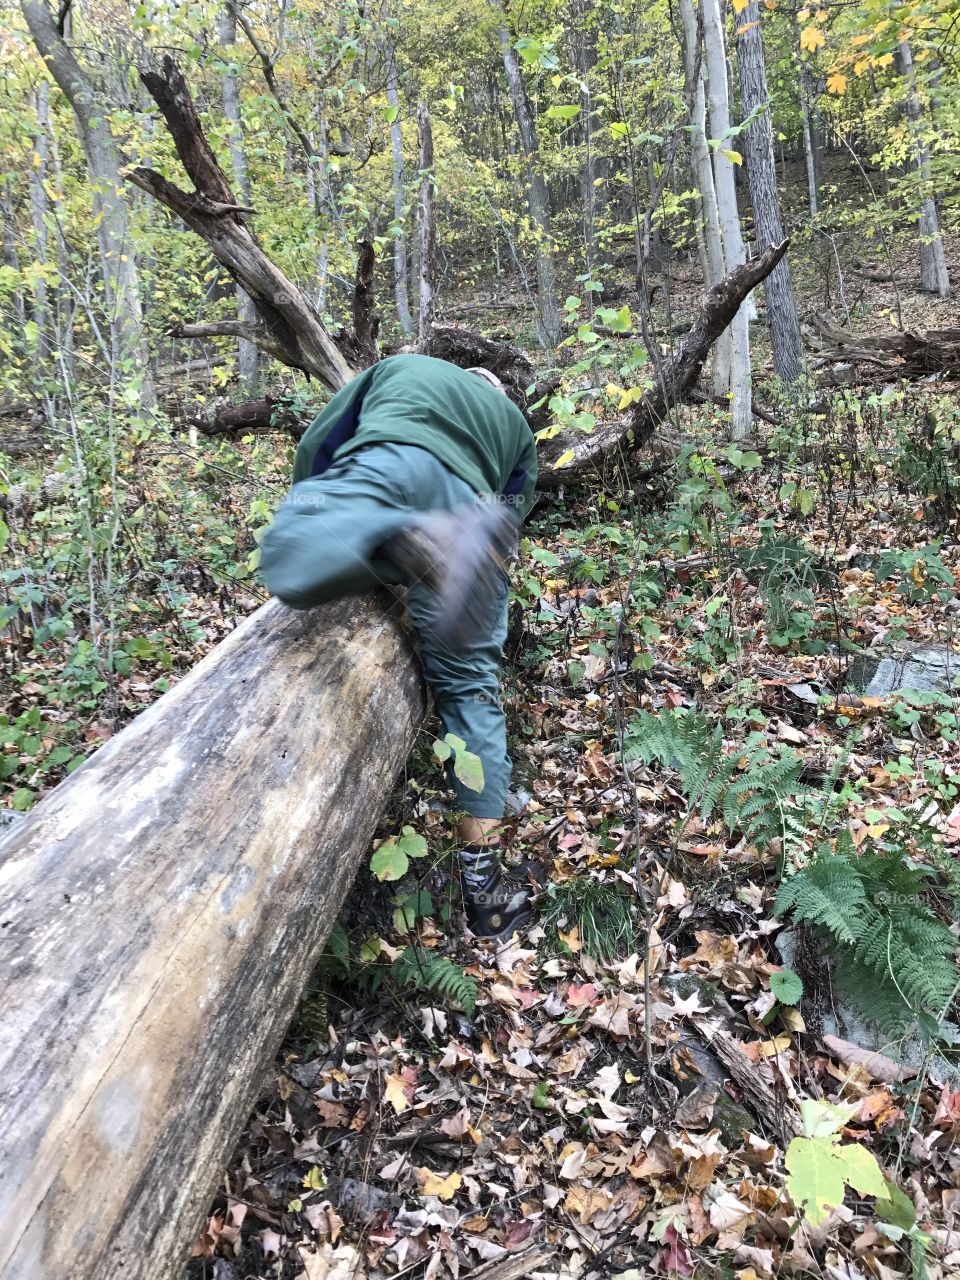 Jumping the log